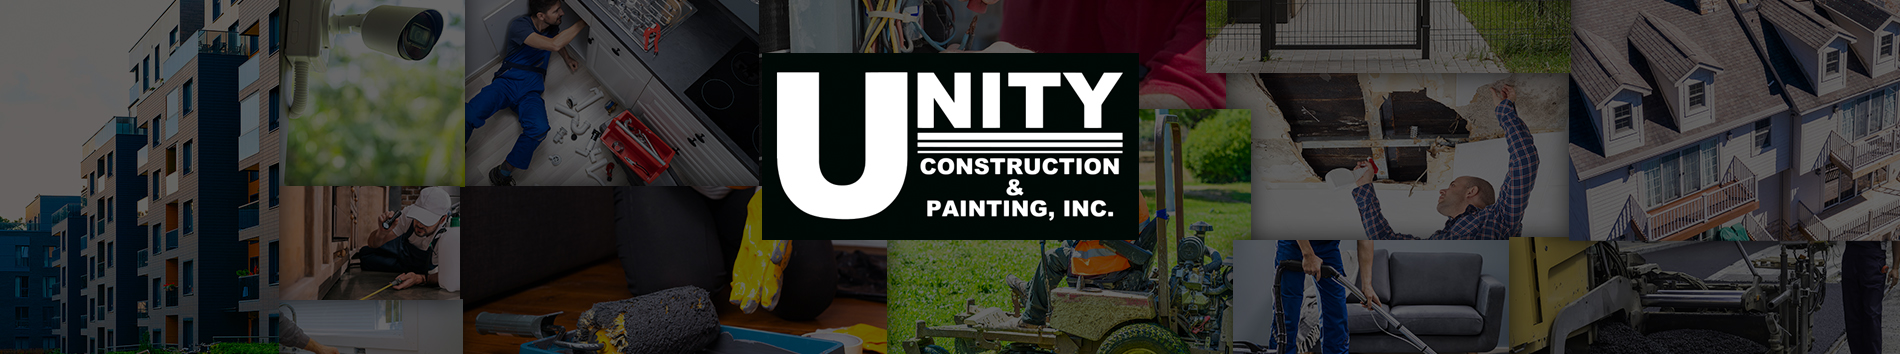 Unity Construction & Painting, Inc.